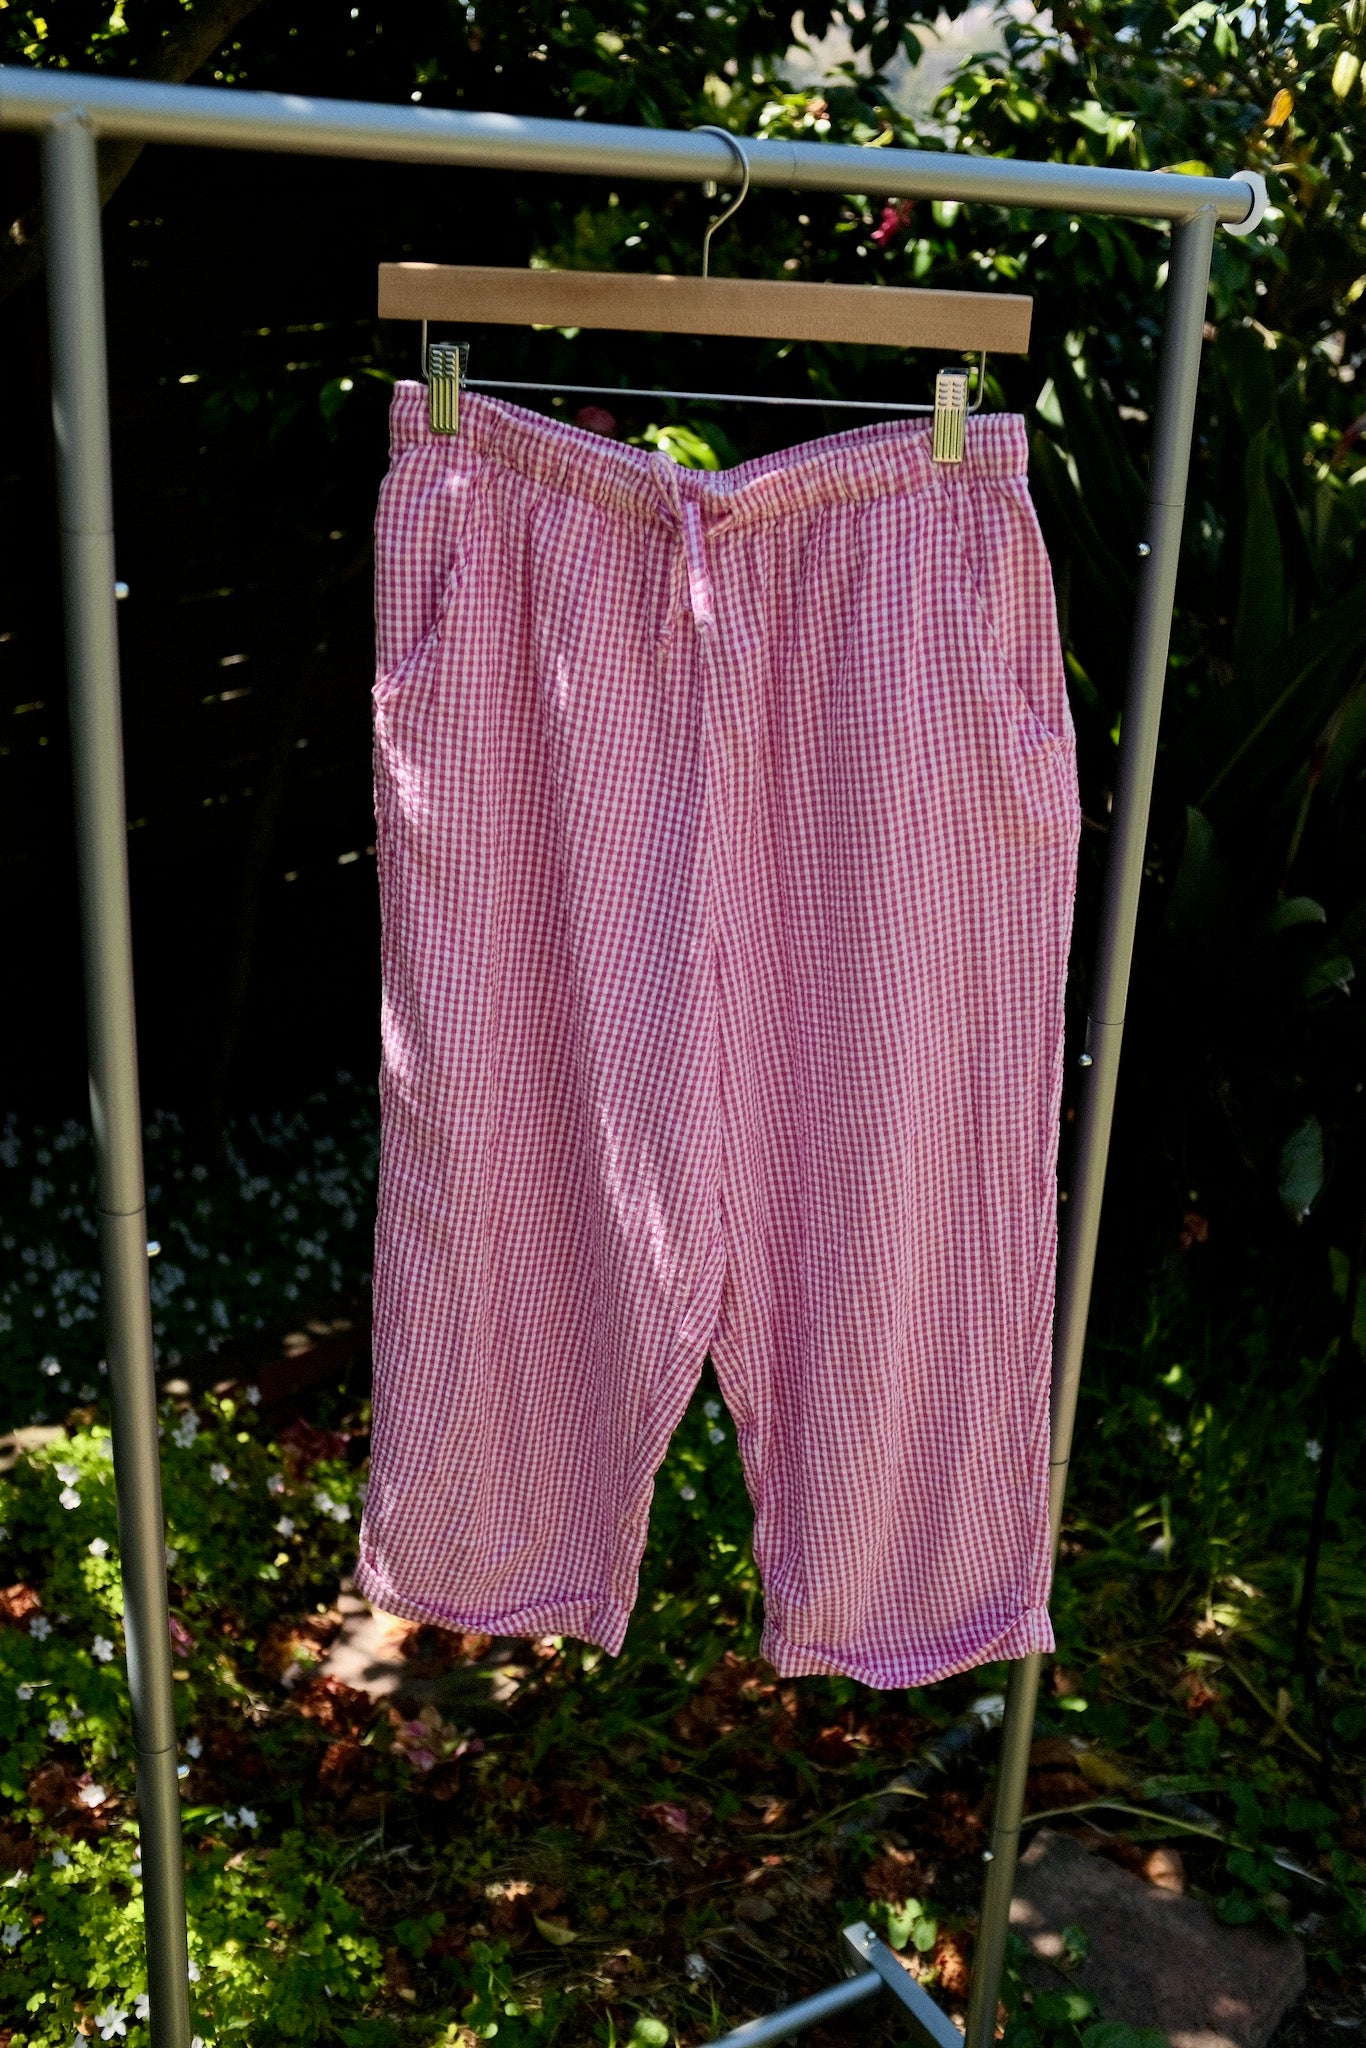 Vintage Hot Pink Gingham Pants